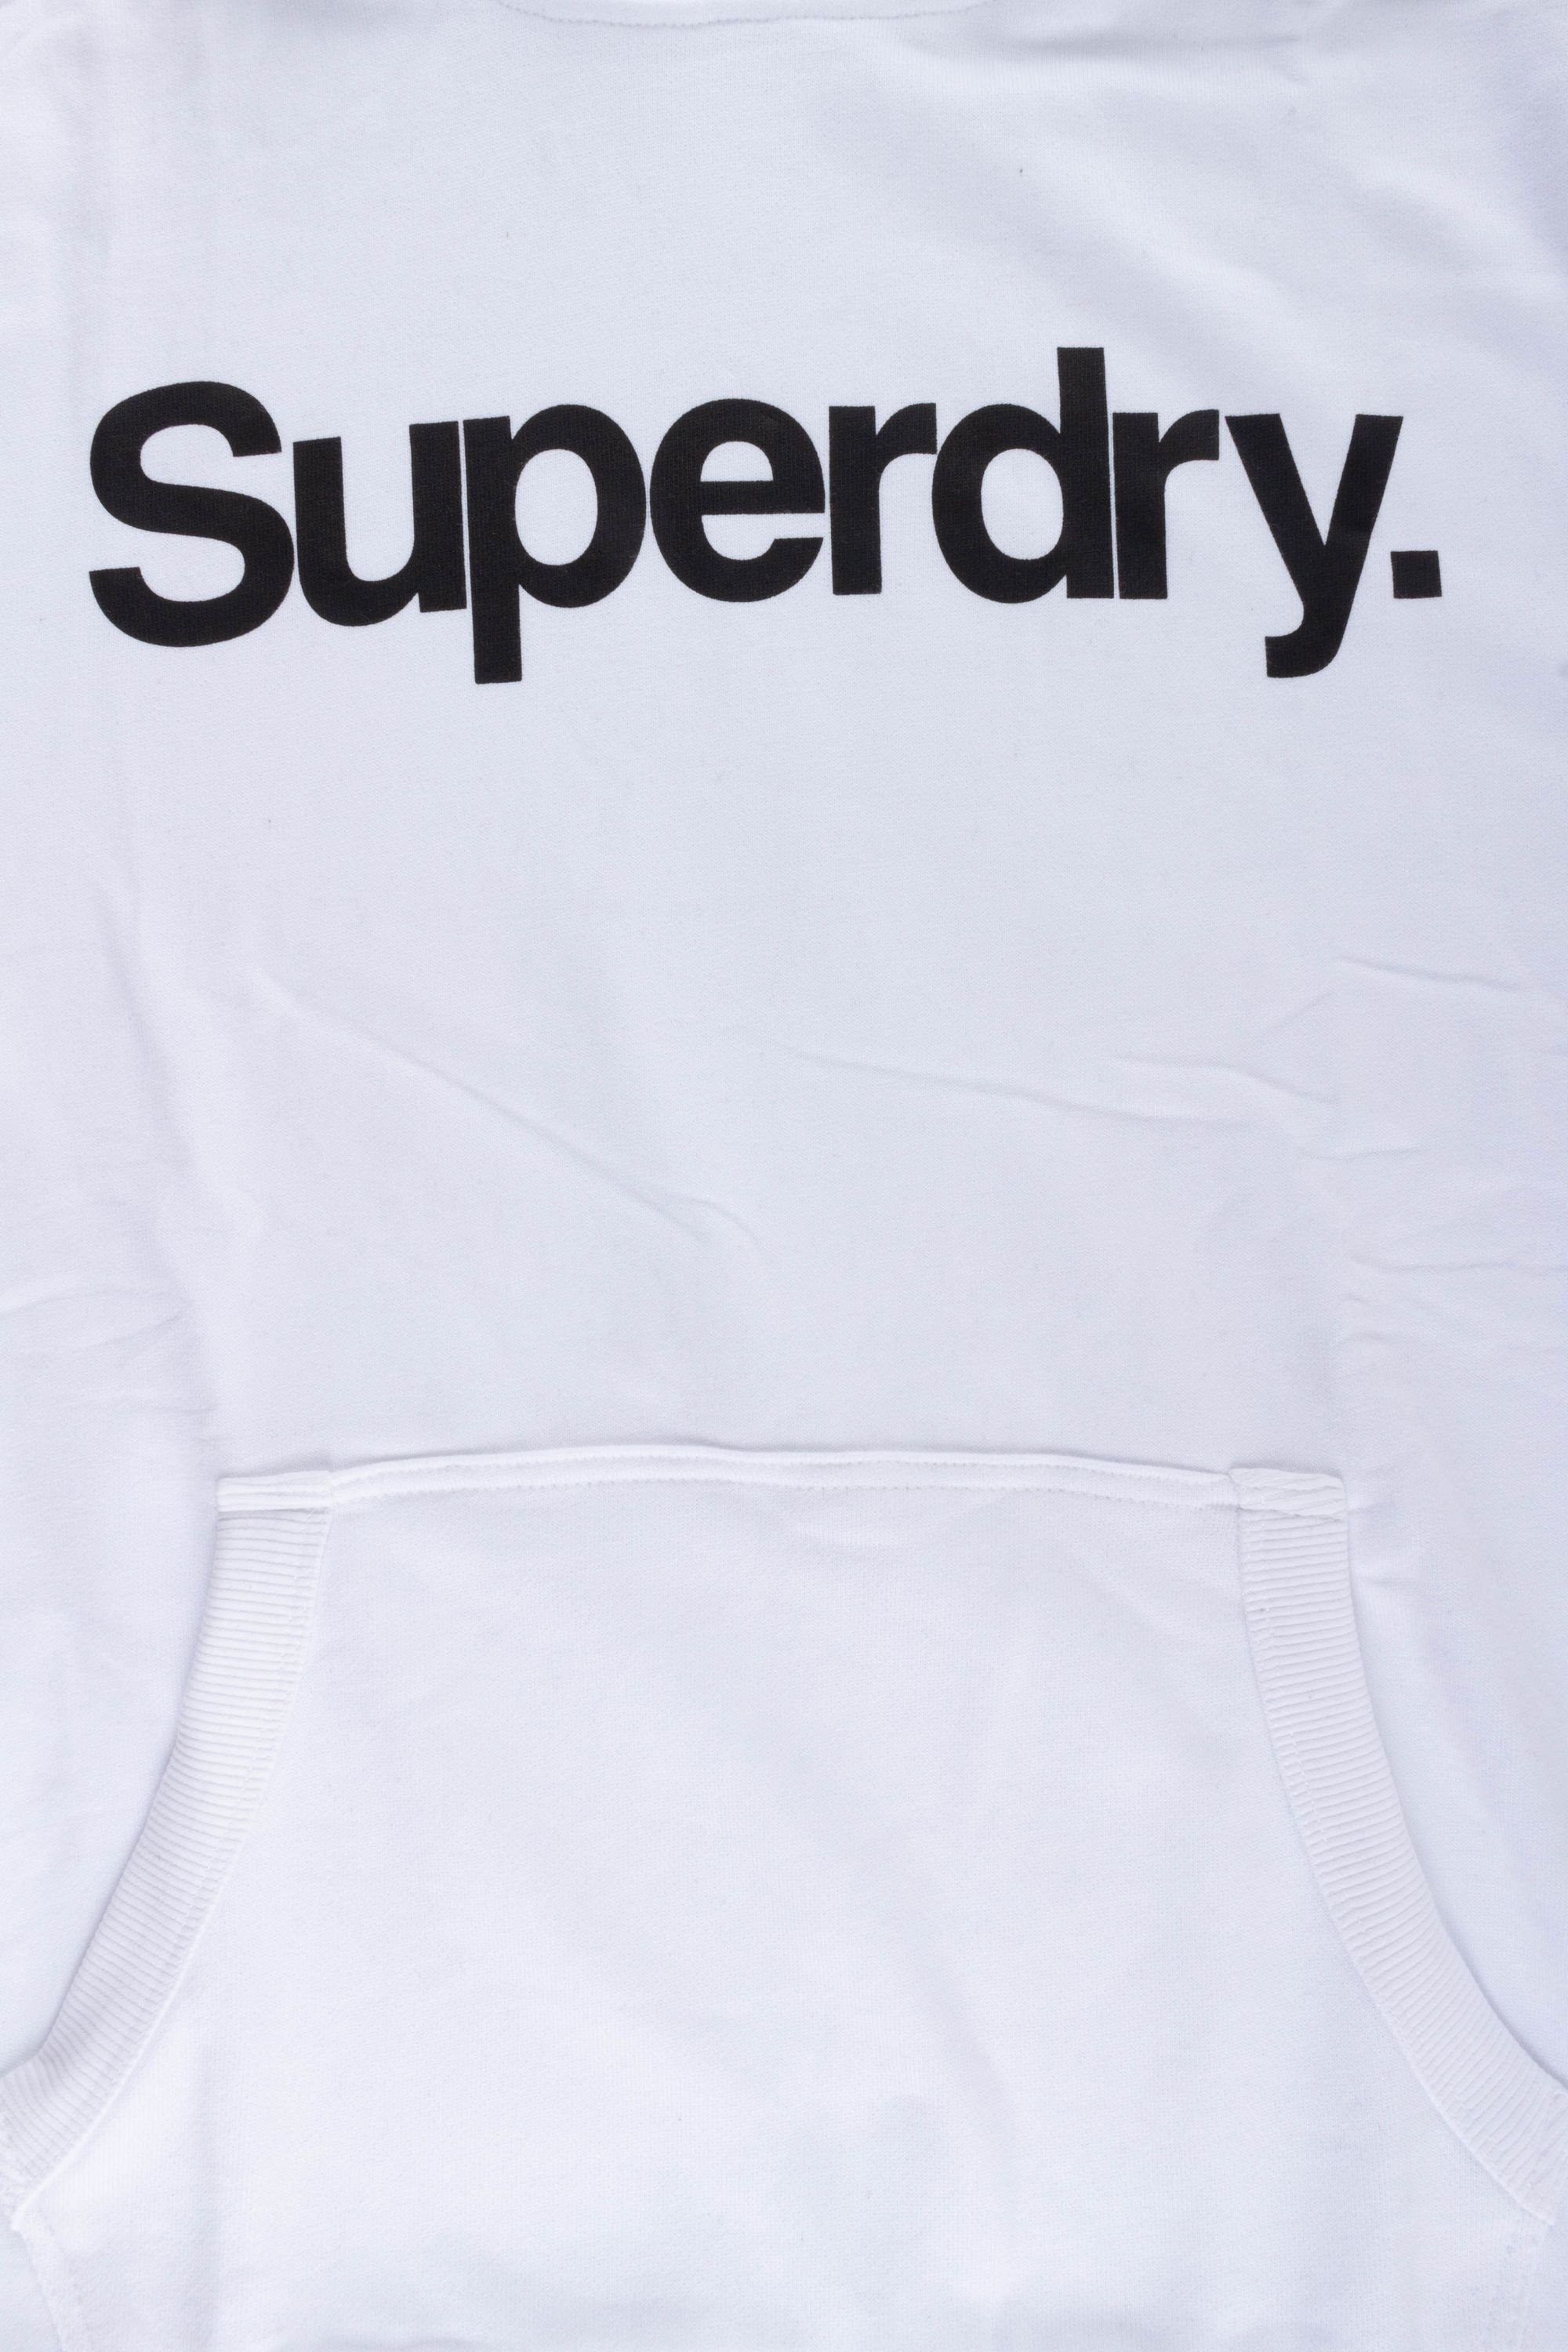 Superdry Kapuzensweatshirt Hoodie Hoodie schwarzem mit Superdry Herren Brustschriftzug